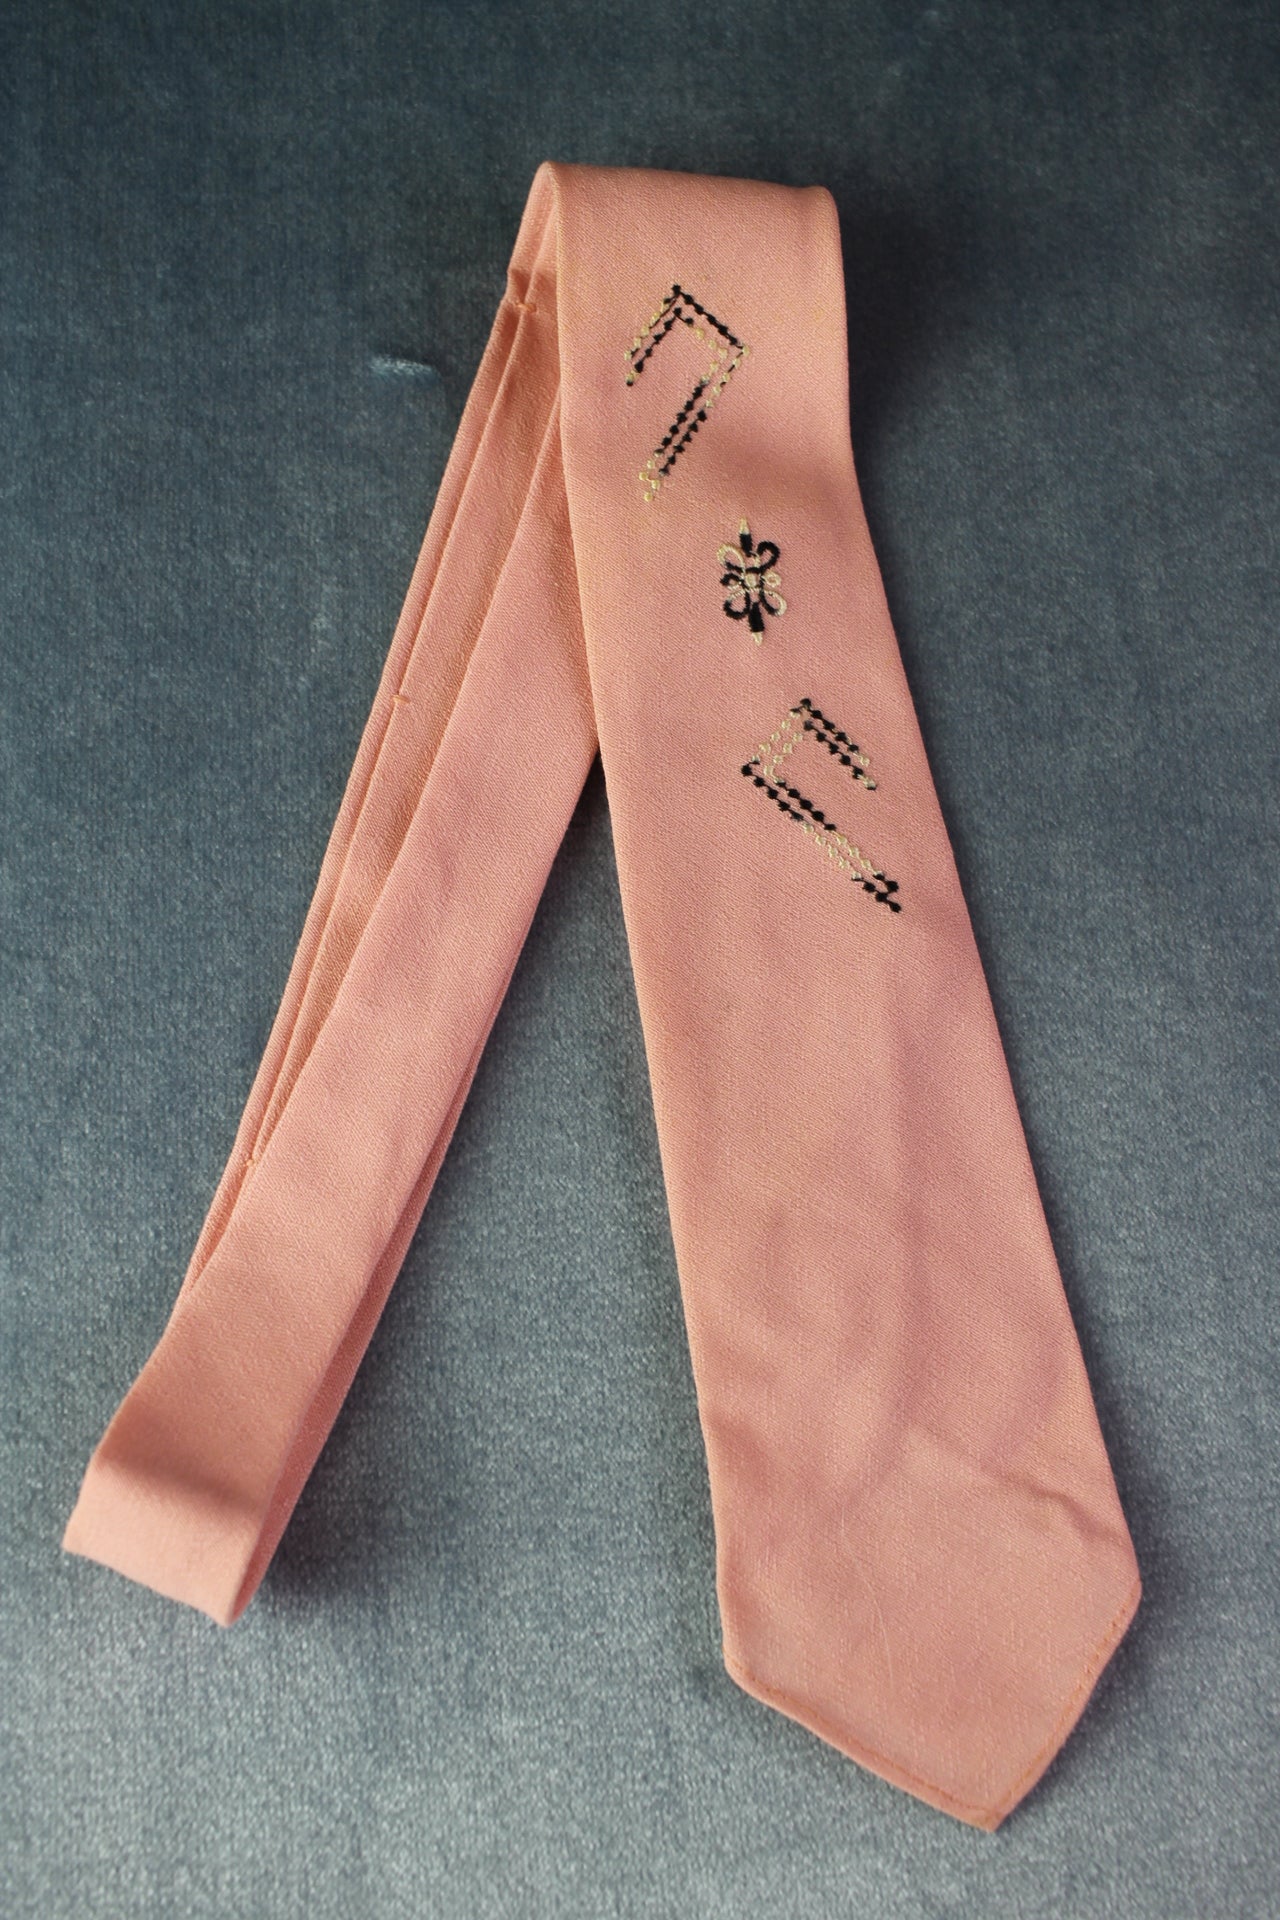 Vintage Palm Springs baby pink black cream motifs pattern tie